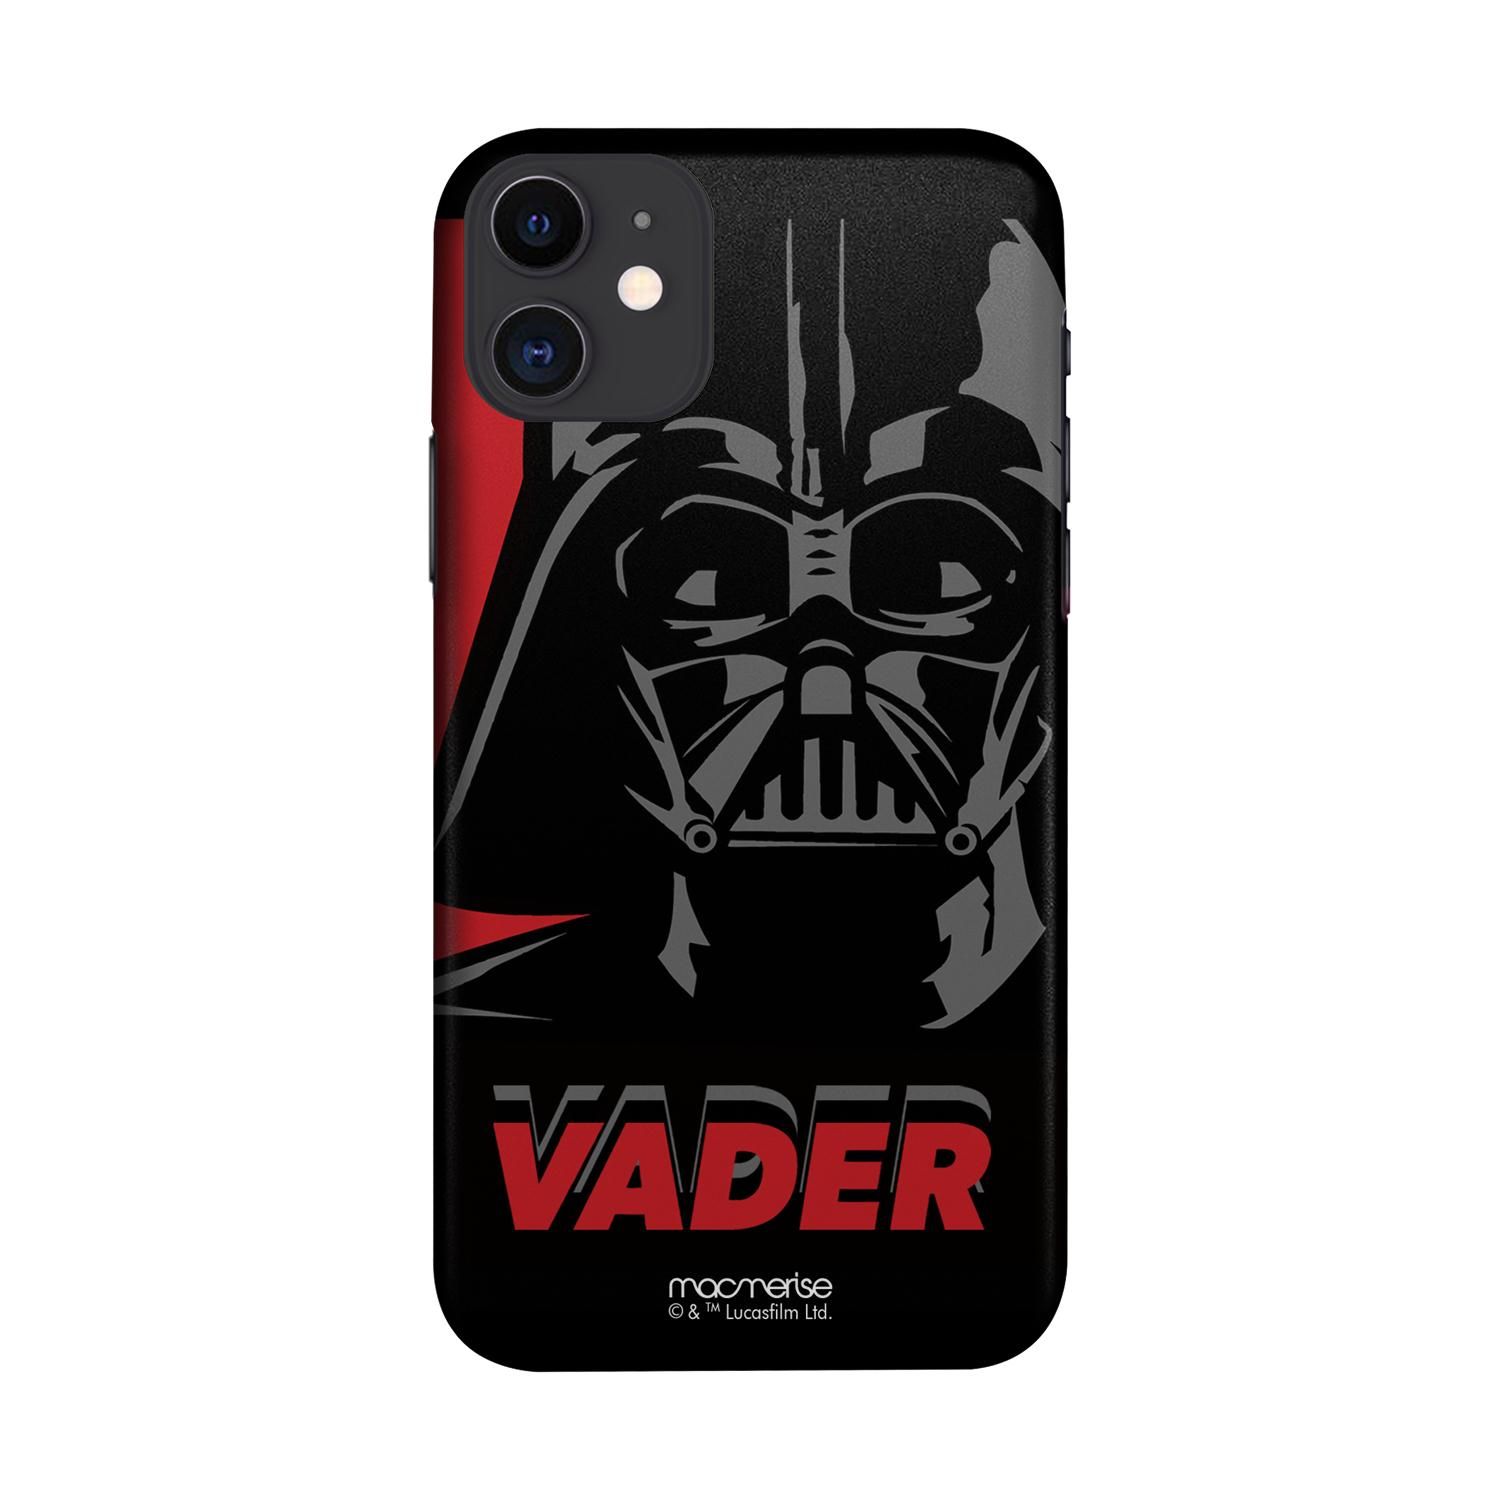 Buy Vader - Sleek Phone Case for iPhone 11 Online